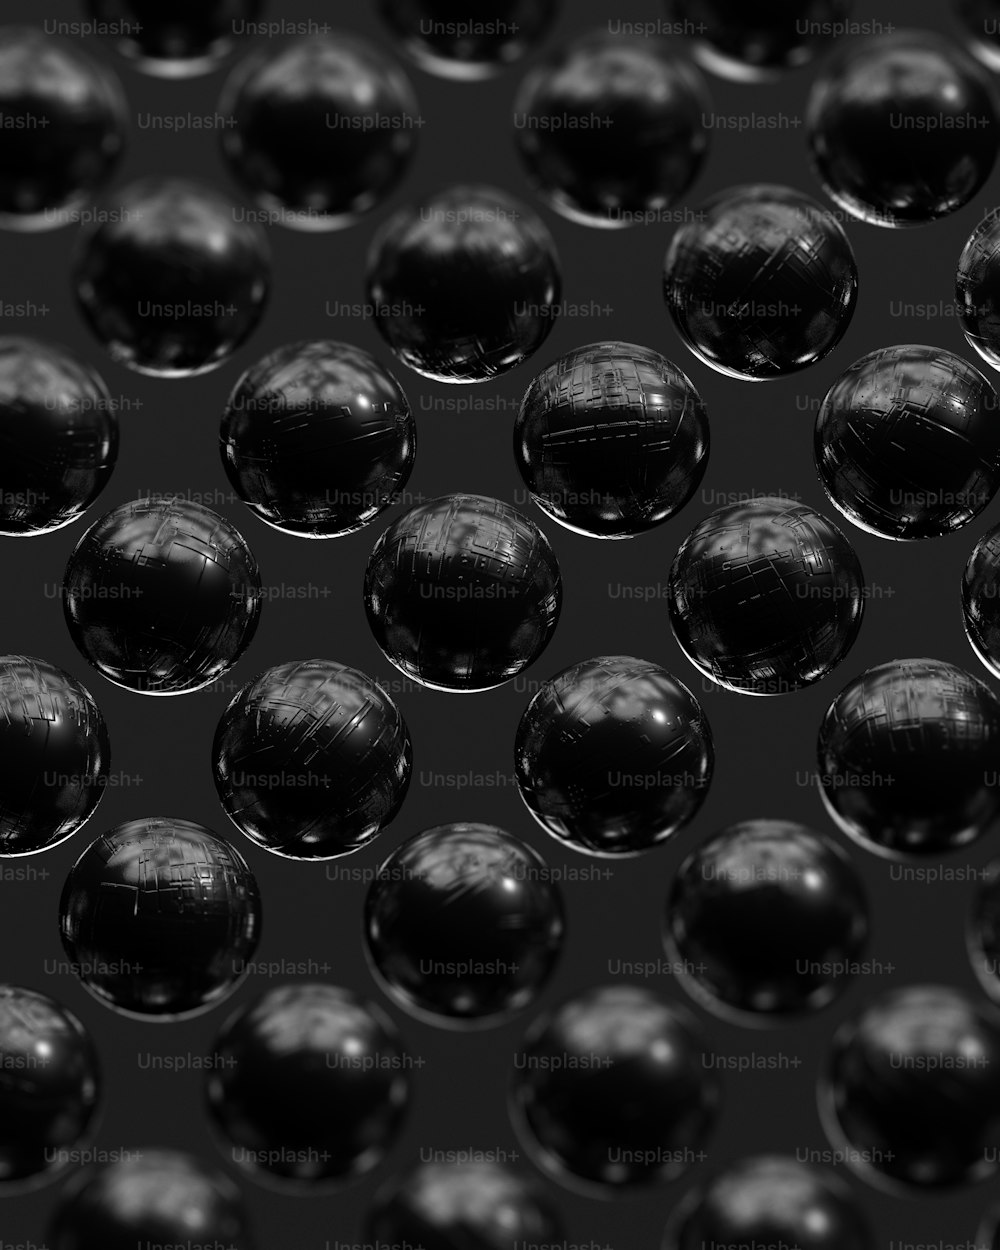 a lot of shiny black balls on a black background